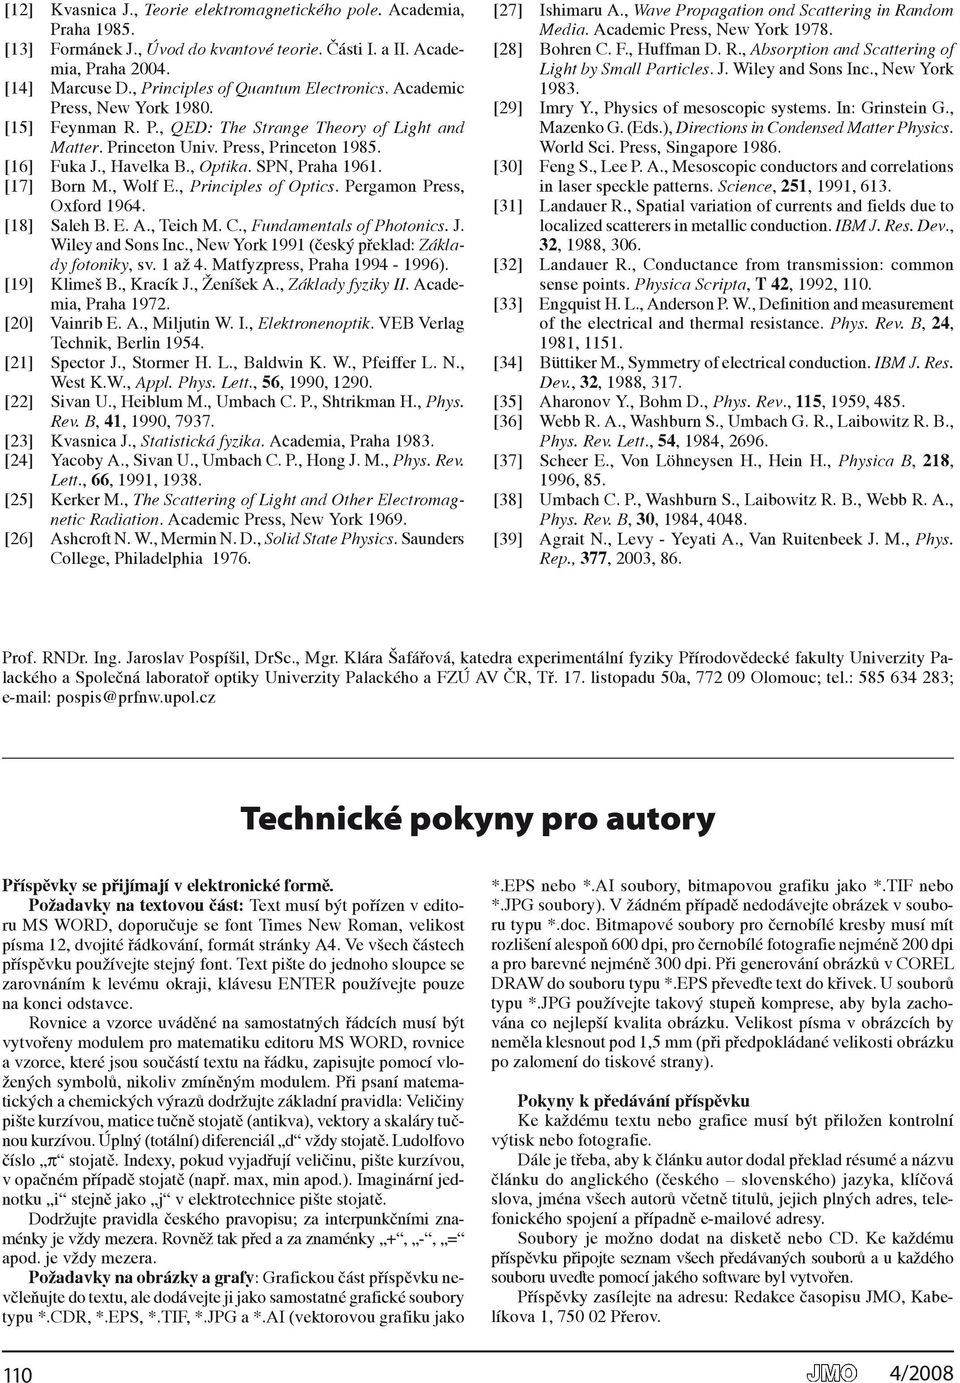 , Optika. SPN, Praha 1961. [17] Born M., Wolf E., Principles of Optics. Pergamon Press, Oxford 1964. [18] Saleh B. E. A., Teich M. C., Fundamentals of Photonics. J. Wiley and Sons Inc.